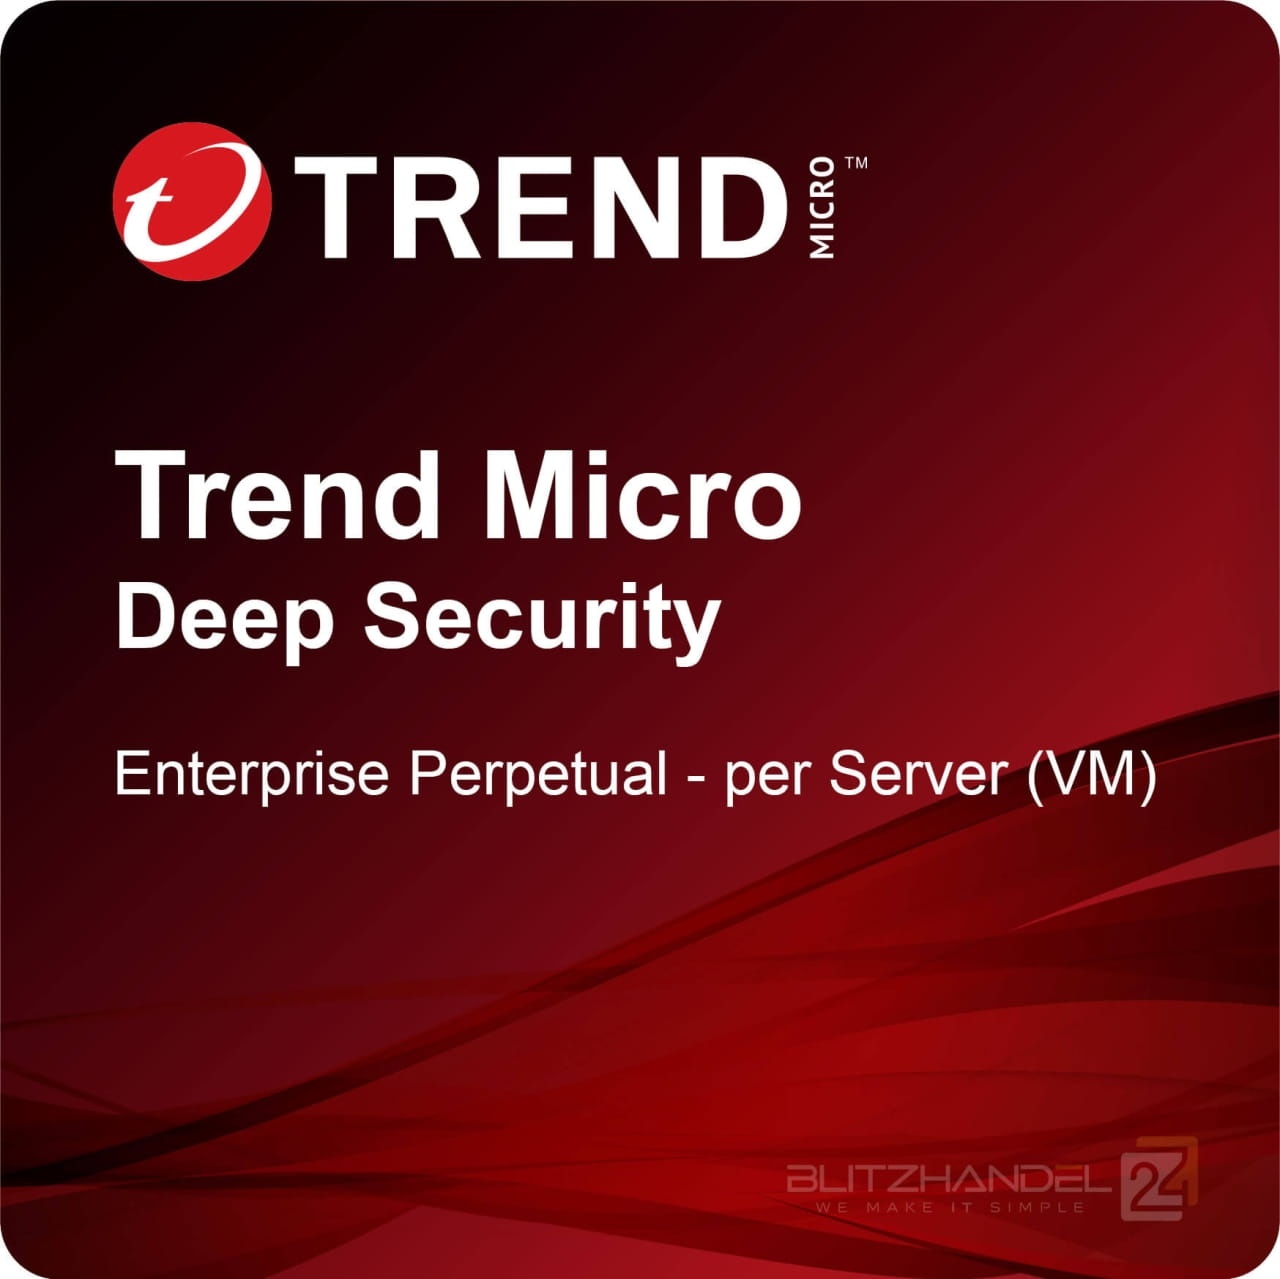 Trend Micro Deep Security - Enterprise Perpetual - per Server (VM)